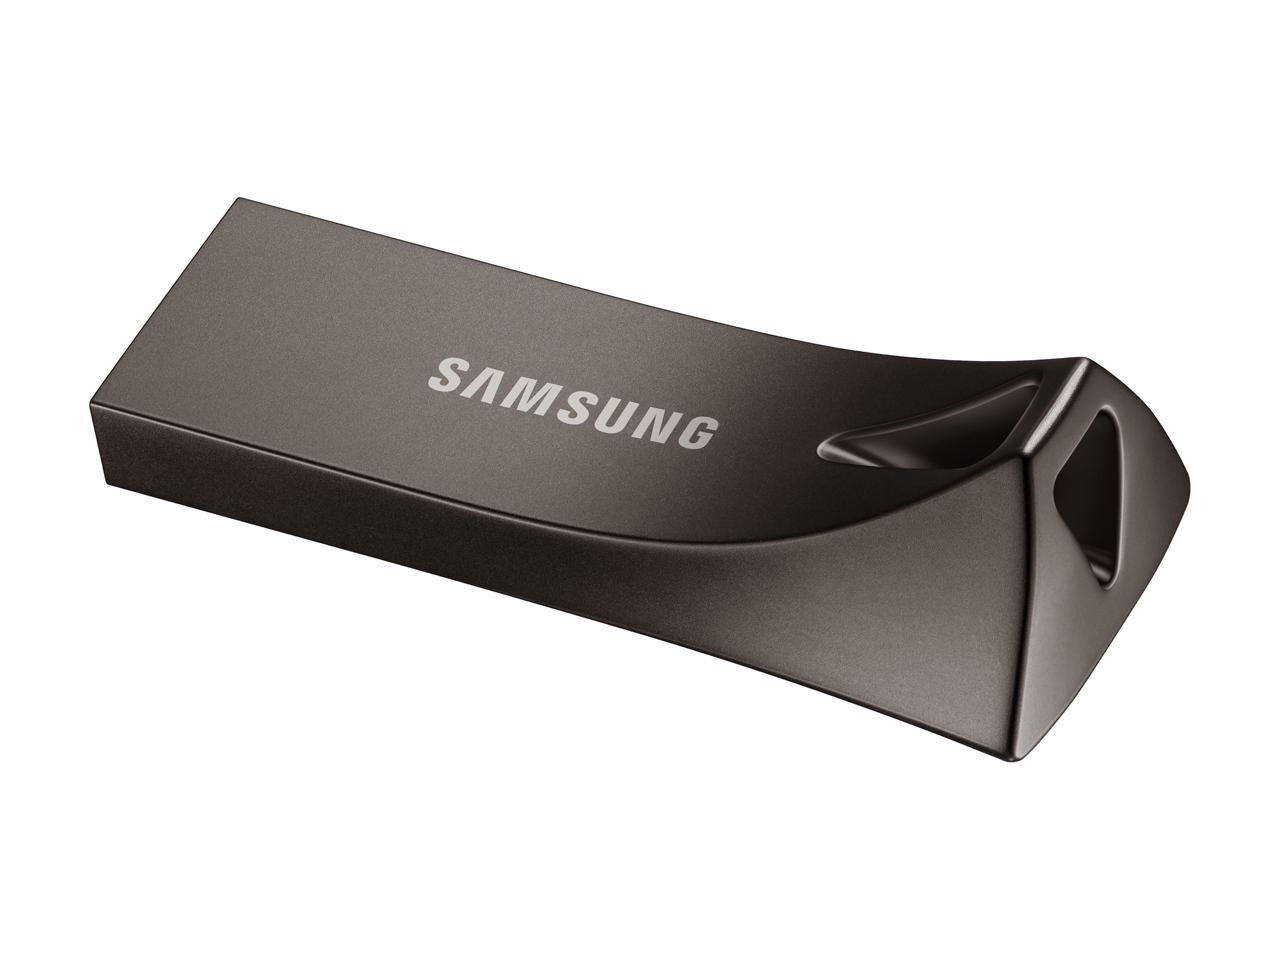 SAMSUNG 64GB BAR Plus (Metal) USB 3.1 Flash Drive, Speed Up to 300MB/s (MUF-64BE4/AM)